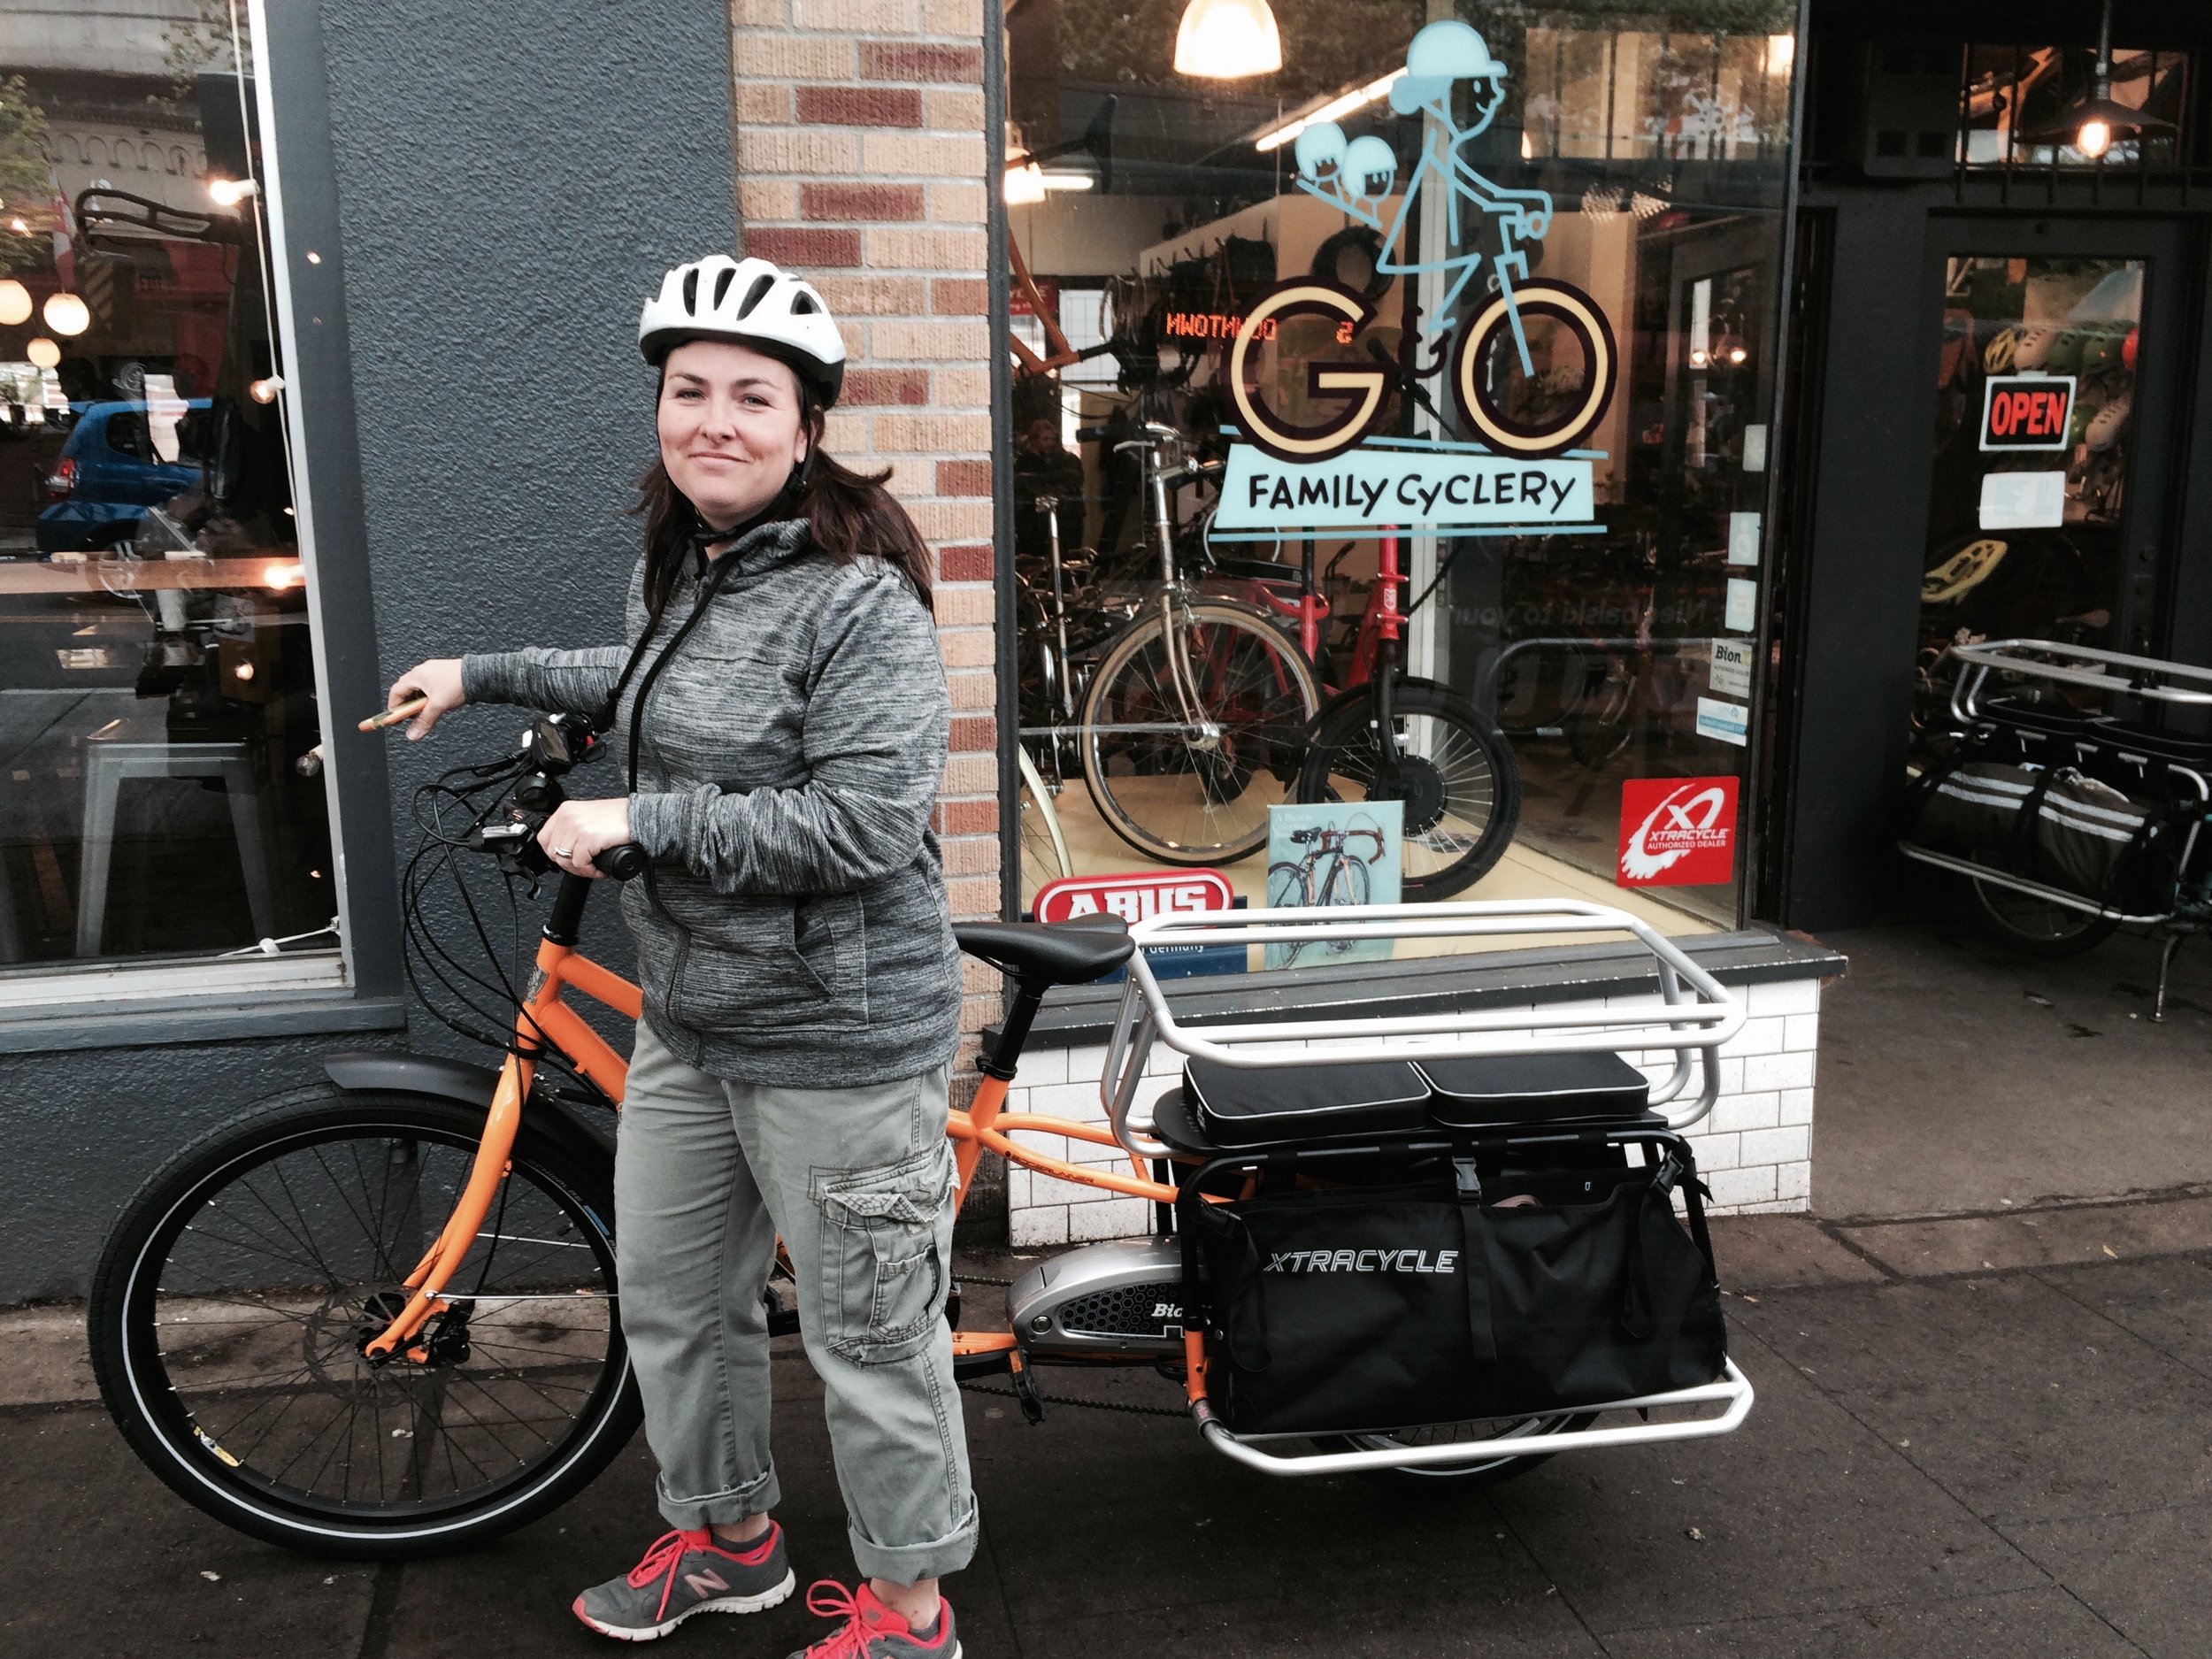 Sale! Electric Bikes, Cargo Bikes, Family Bikes on Sale — GandO Family Cyclery Seattle Electric Bike Shop